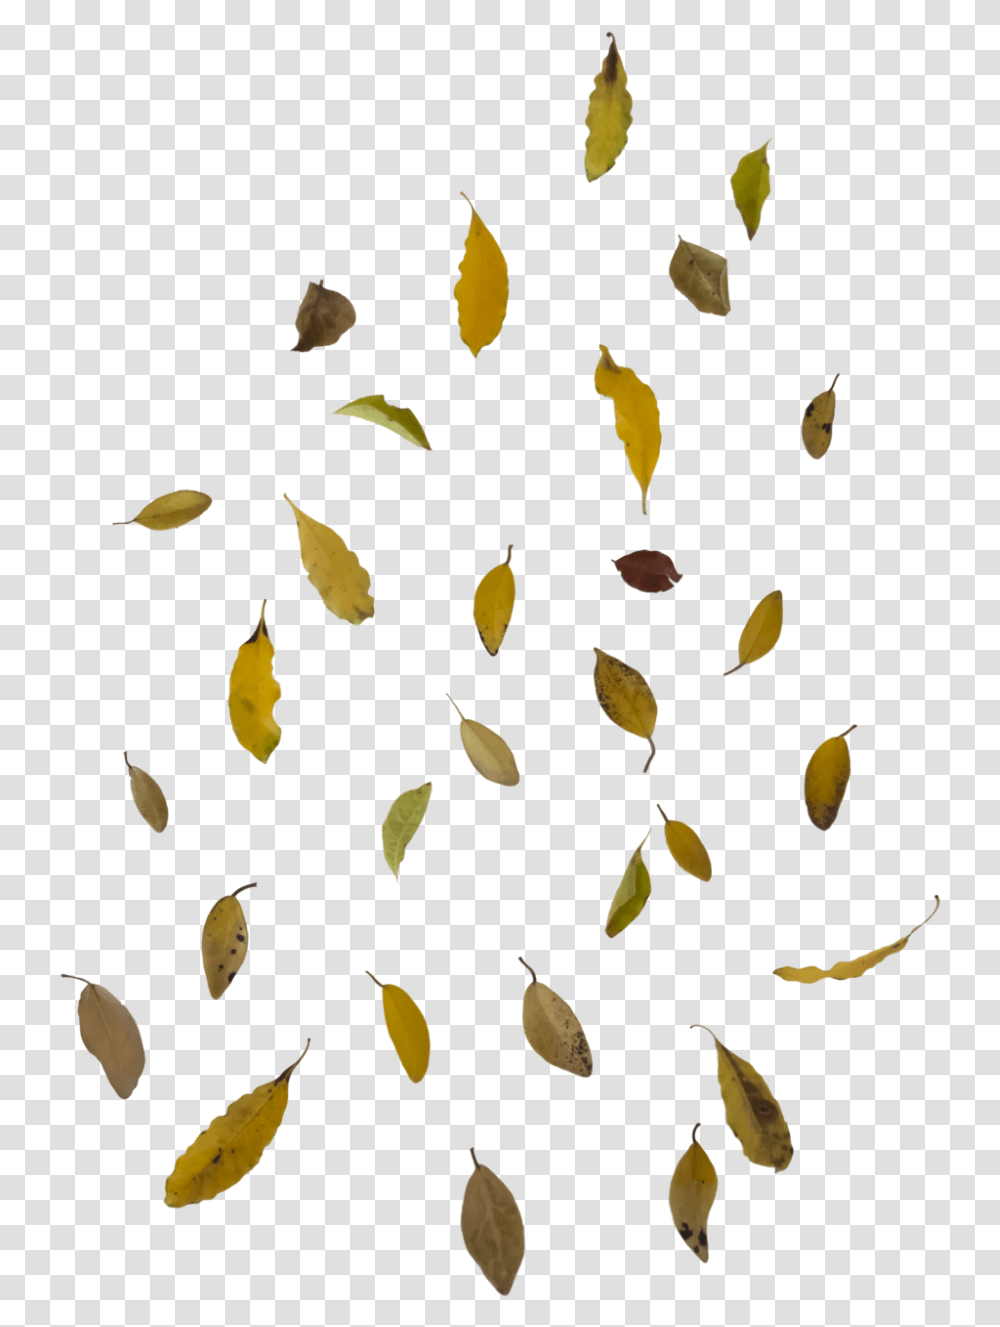 Falling Autumn Leaves Free Image Falling Leaves, Plant, Grain, Produce, Vegetable Transparent Png